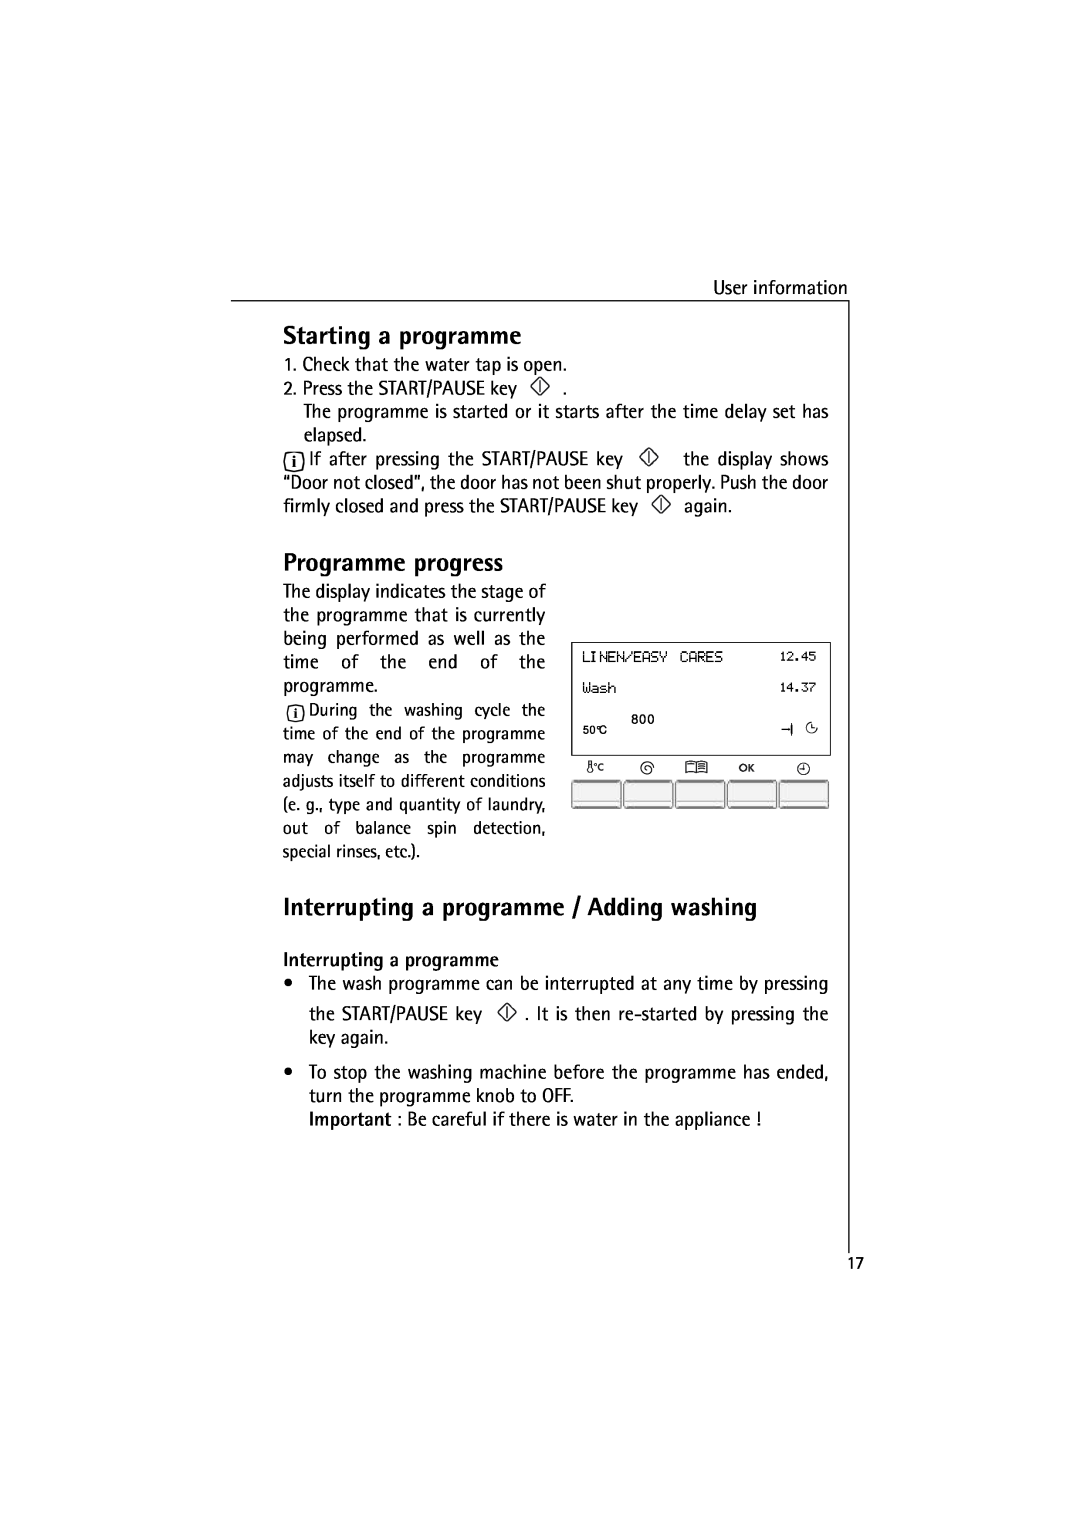 AEG 48380 manual Starting a programme, Programme progress, Interrupting a programme / Adding washing 